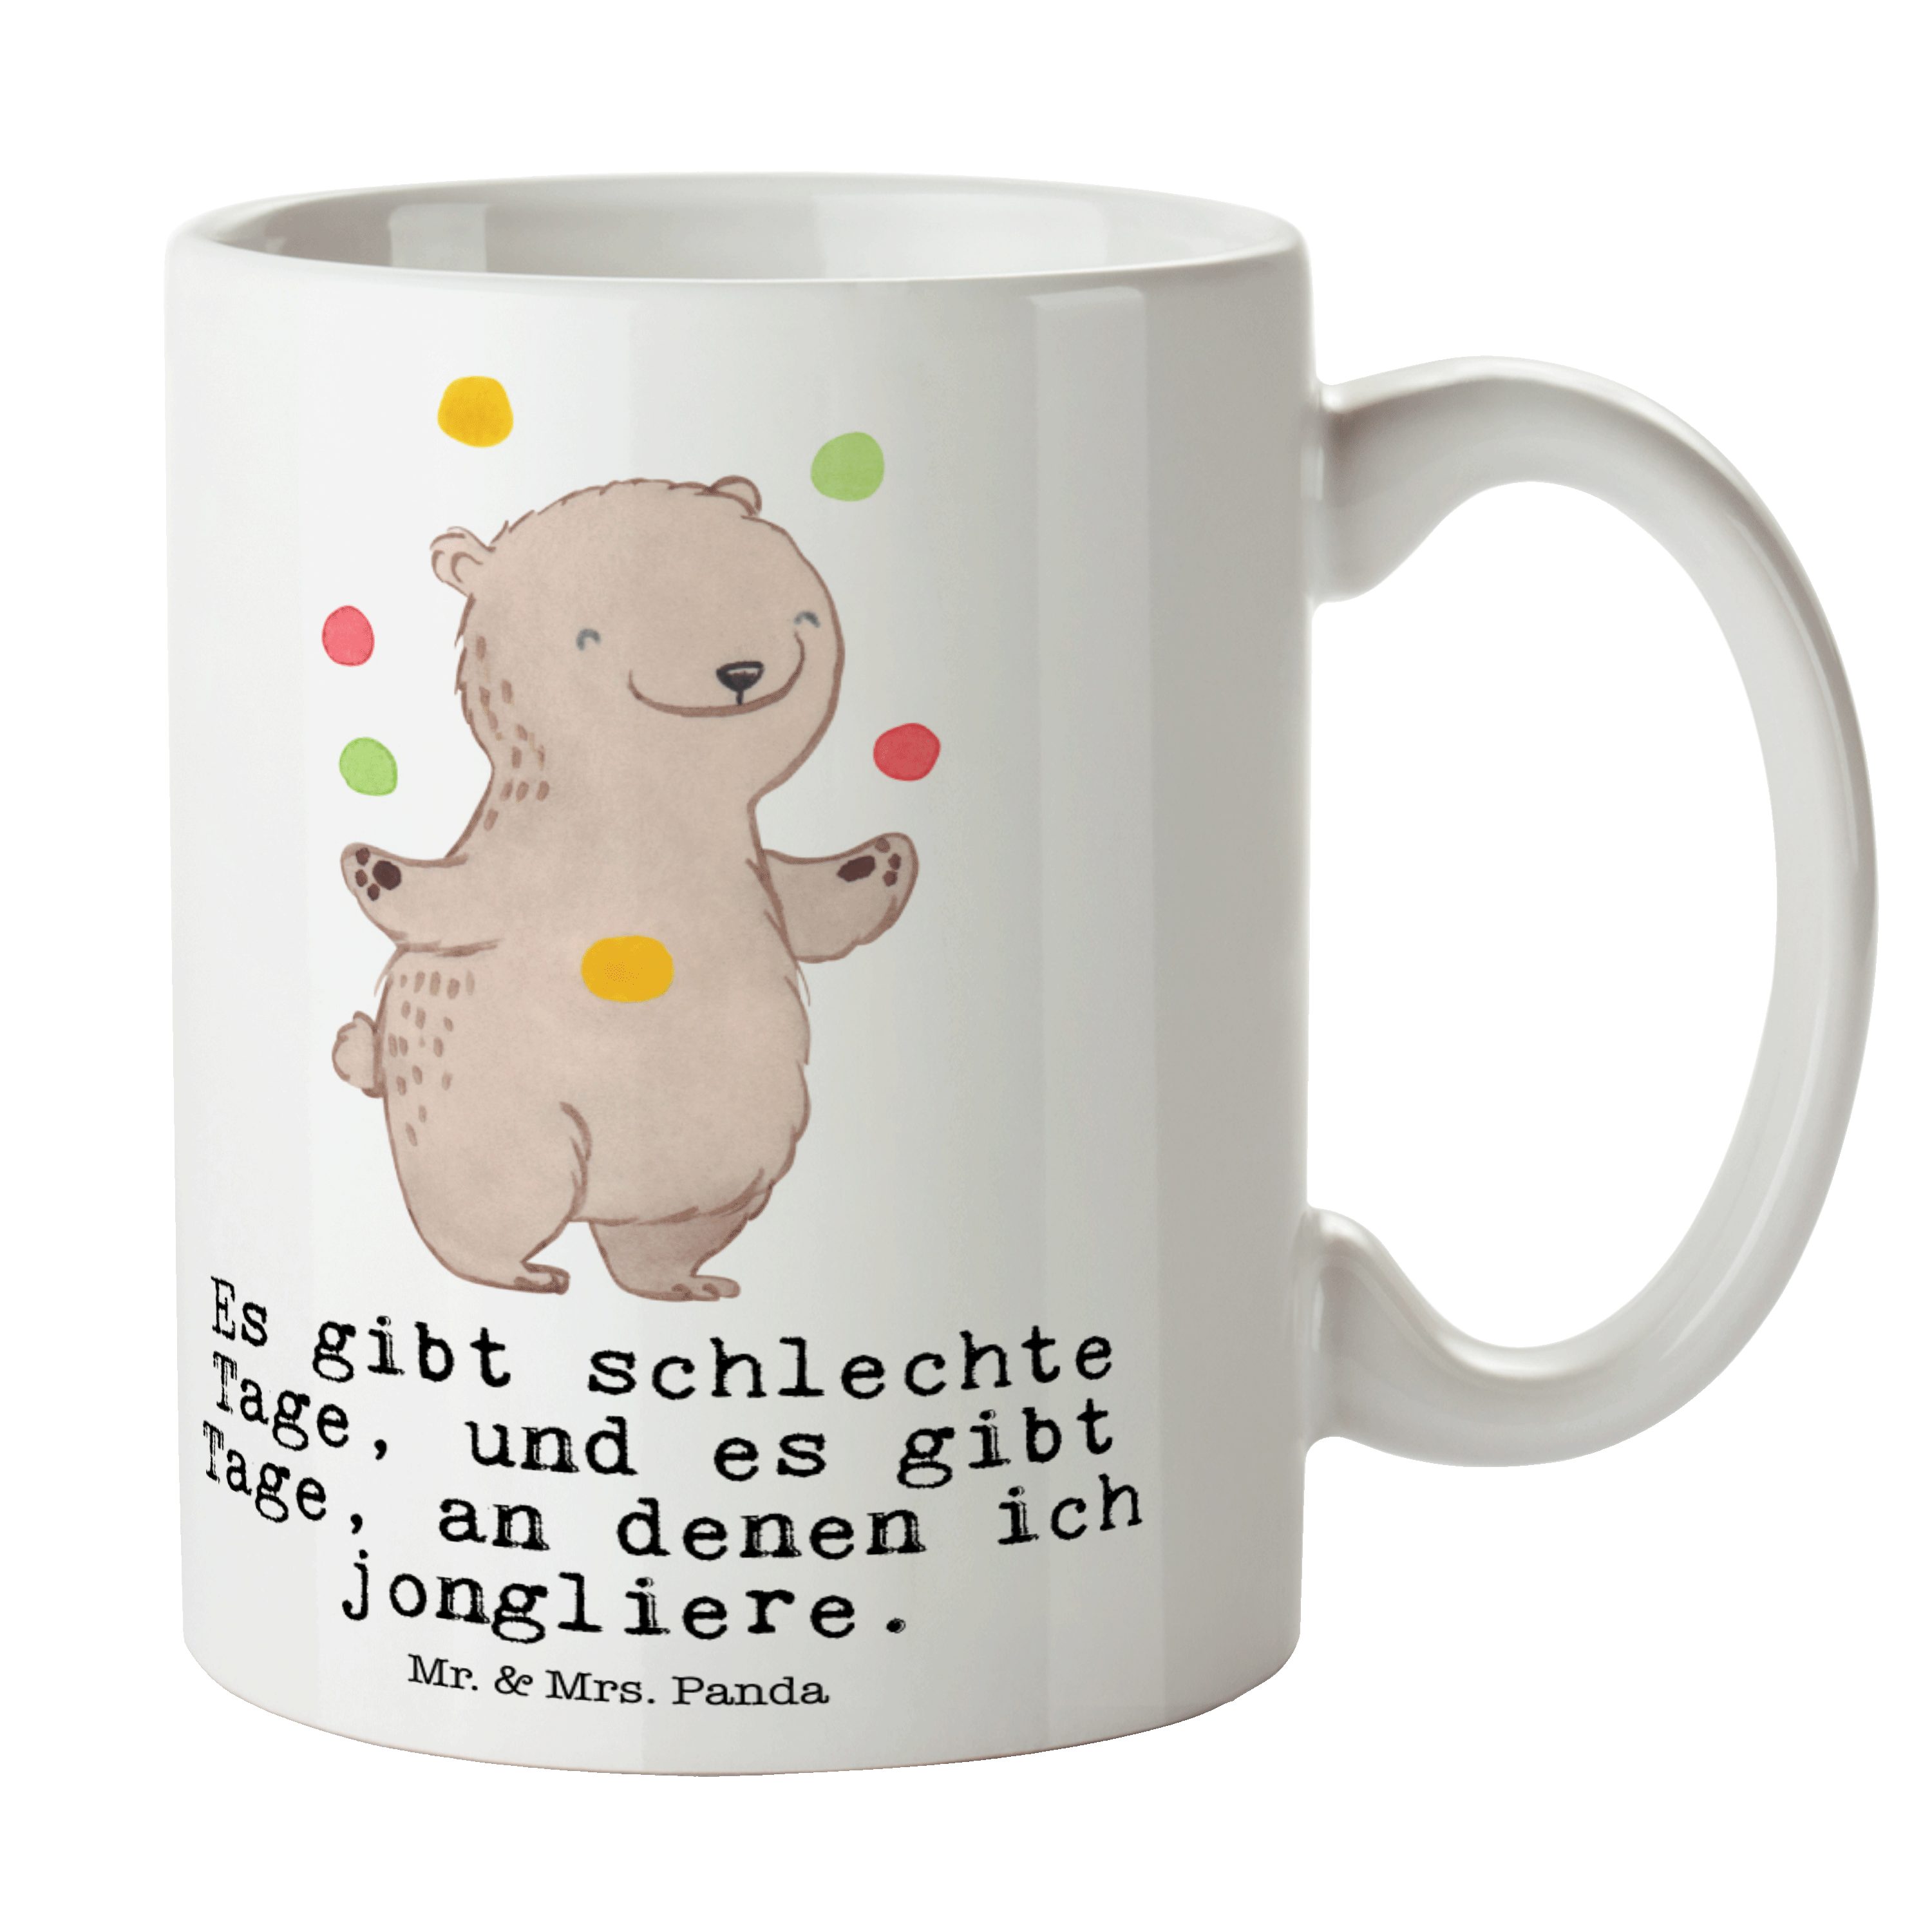 Mr. & Mrs. Panda Tasse Bär Jonglieren Tage - Weiß - Geschenk, Keramiktasse, Teetasse, Kaffee, Keramik